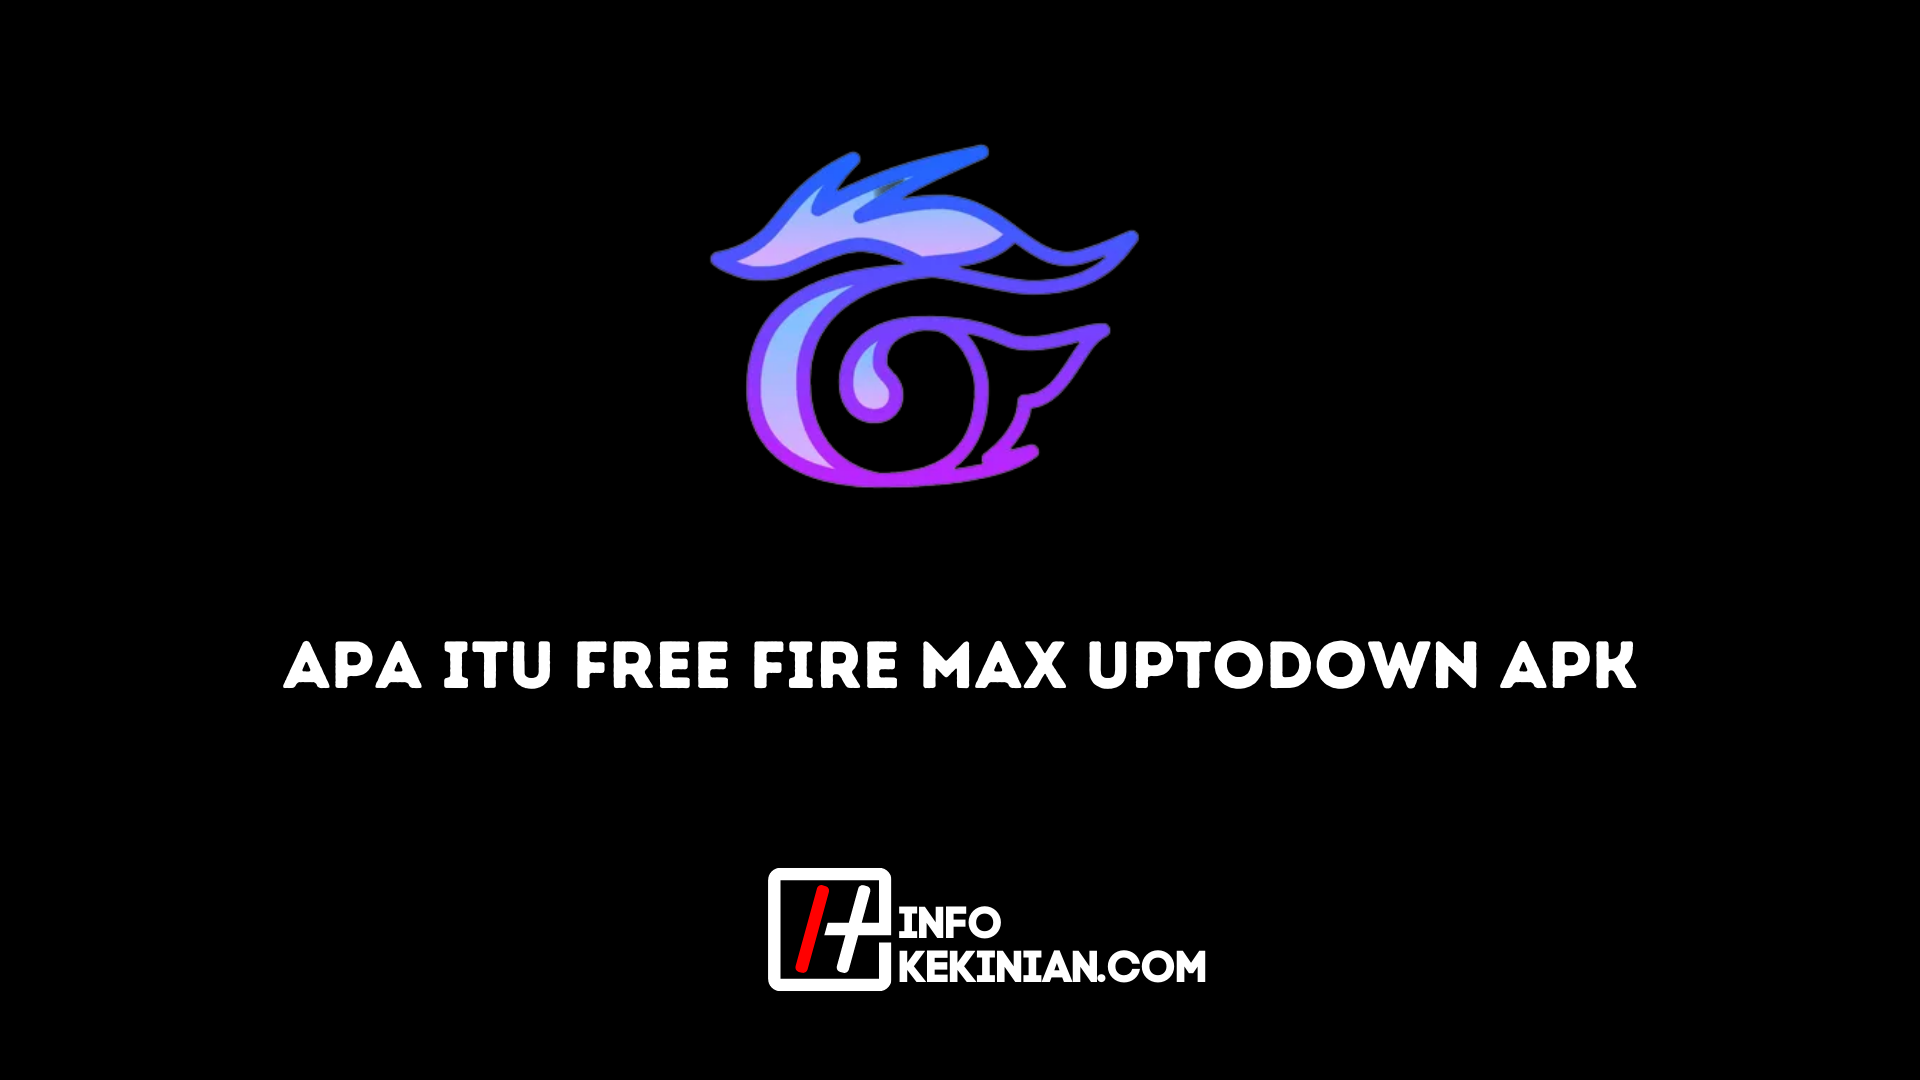 Qu'est-ce que Free Fire Max Uptodown Apk